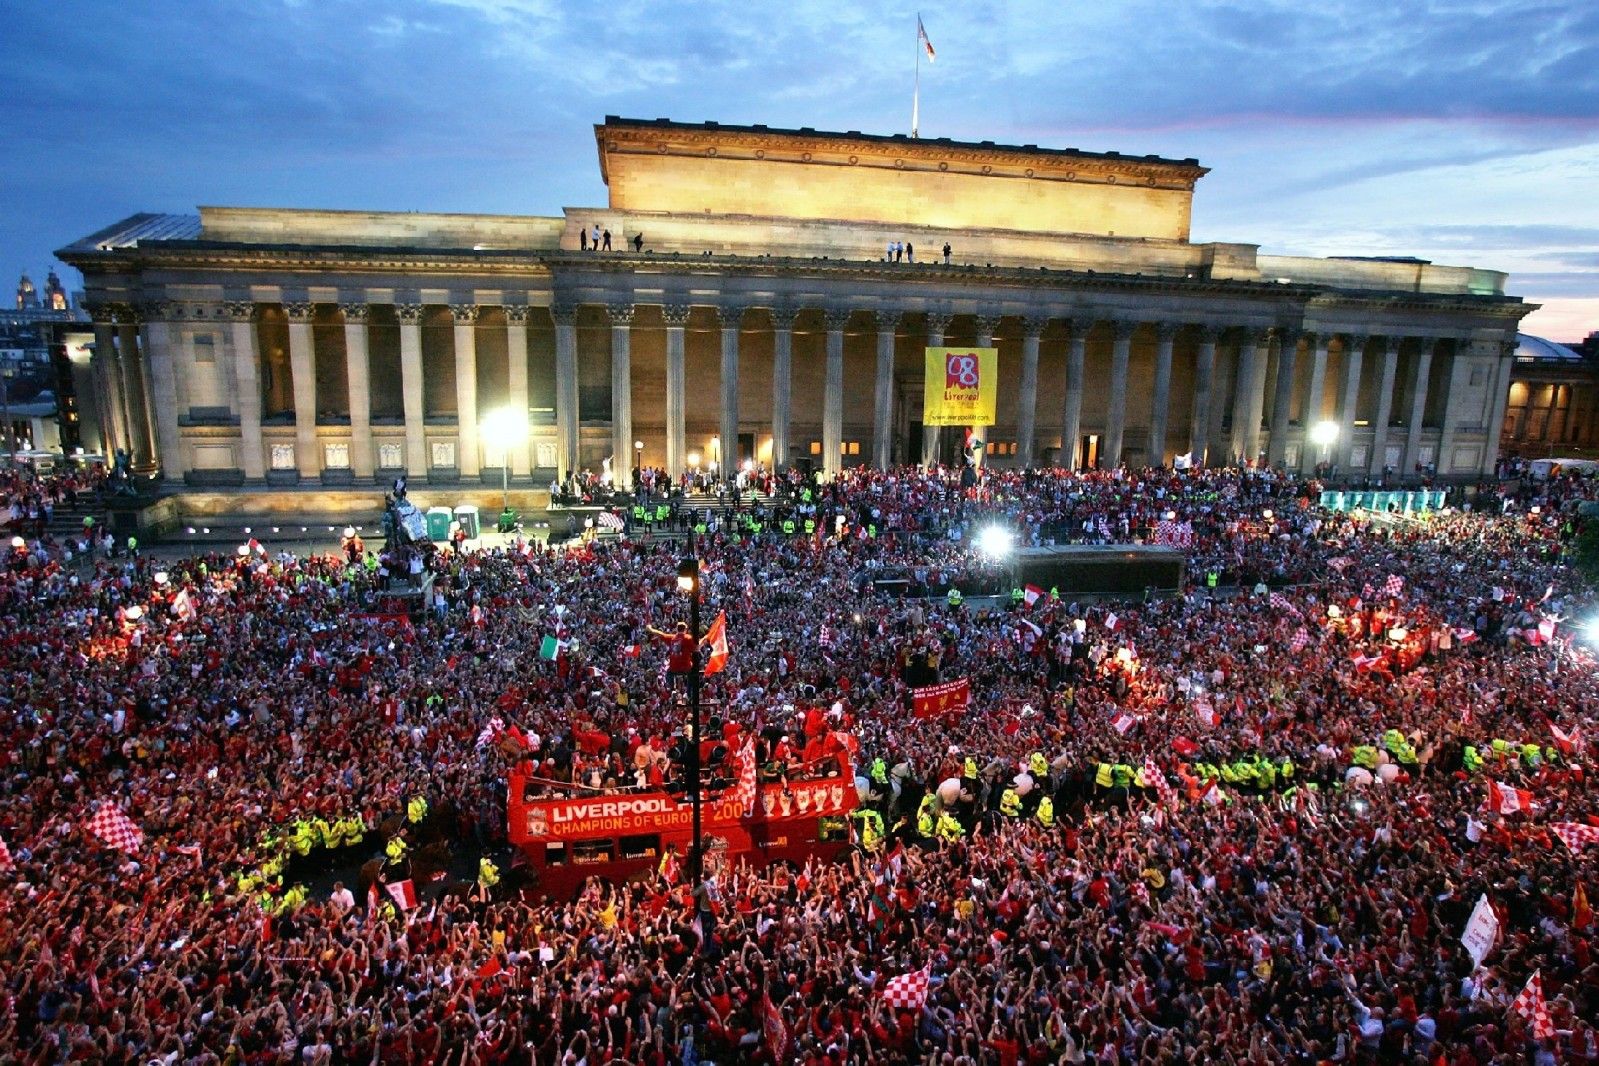 City of Liverpool celebrating football